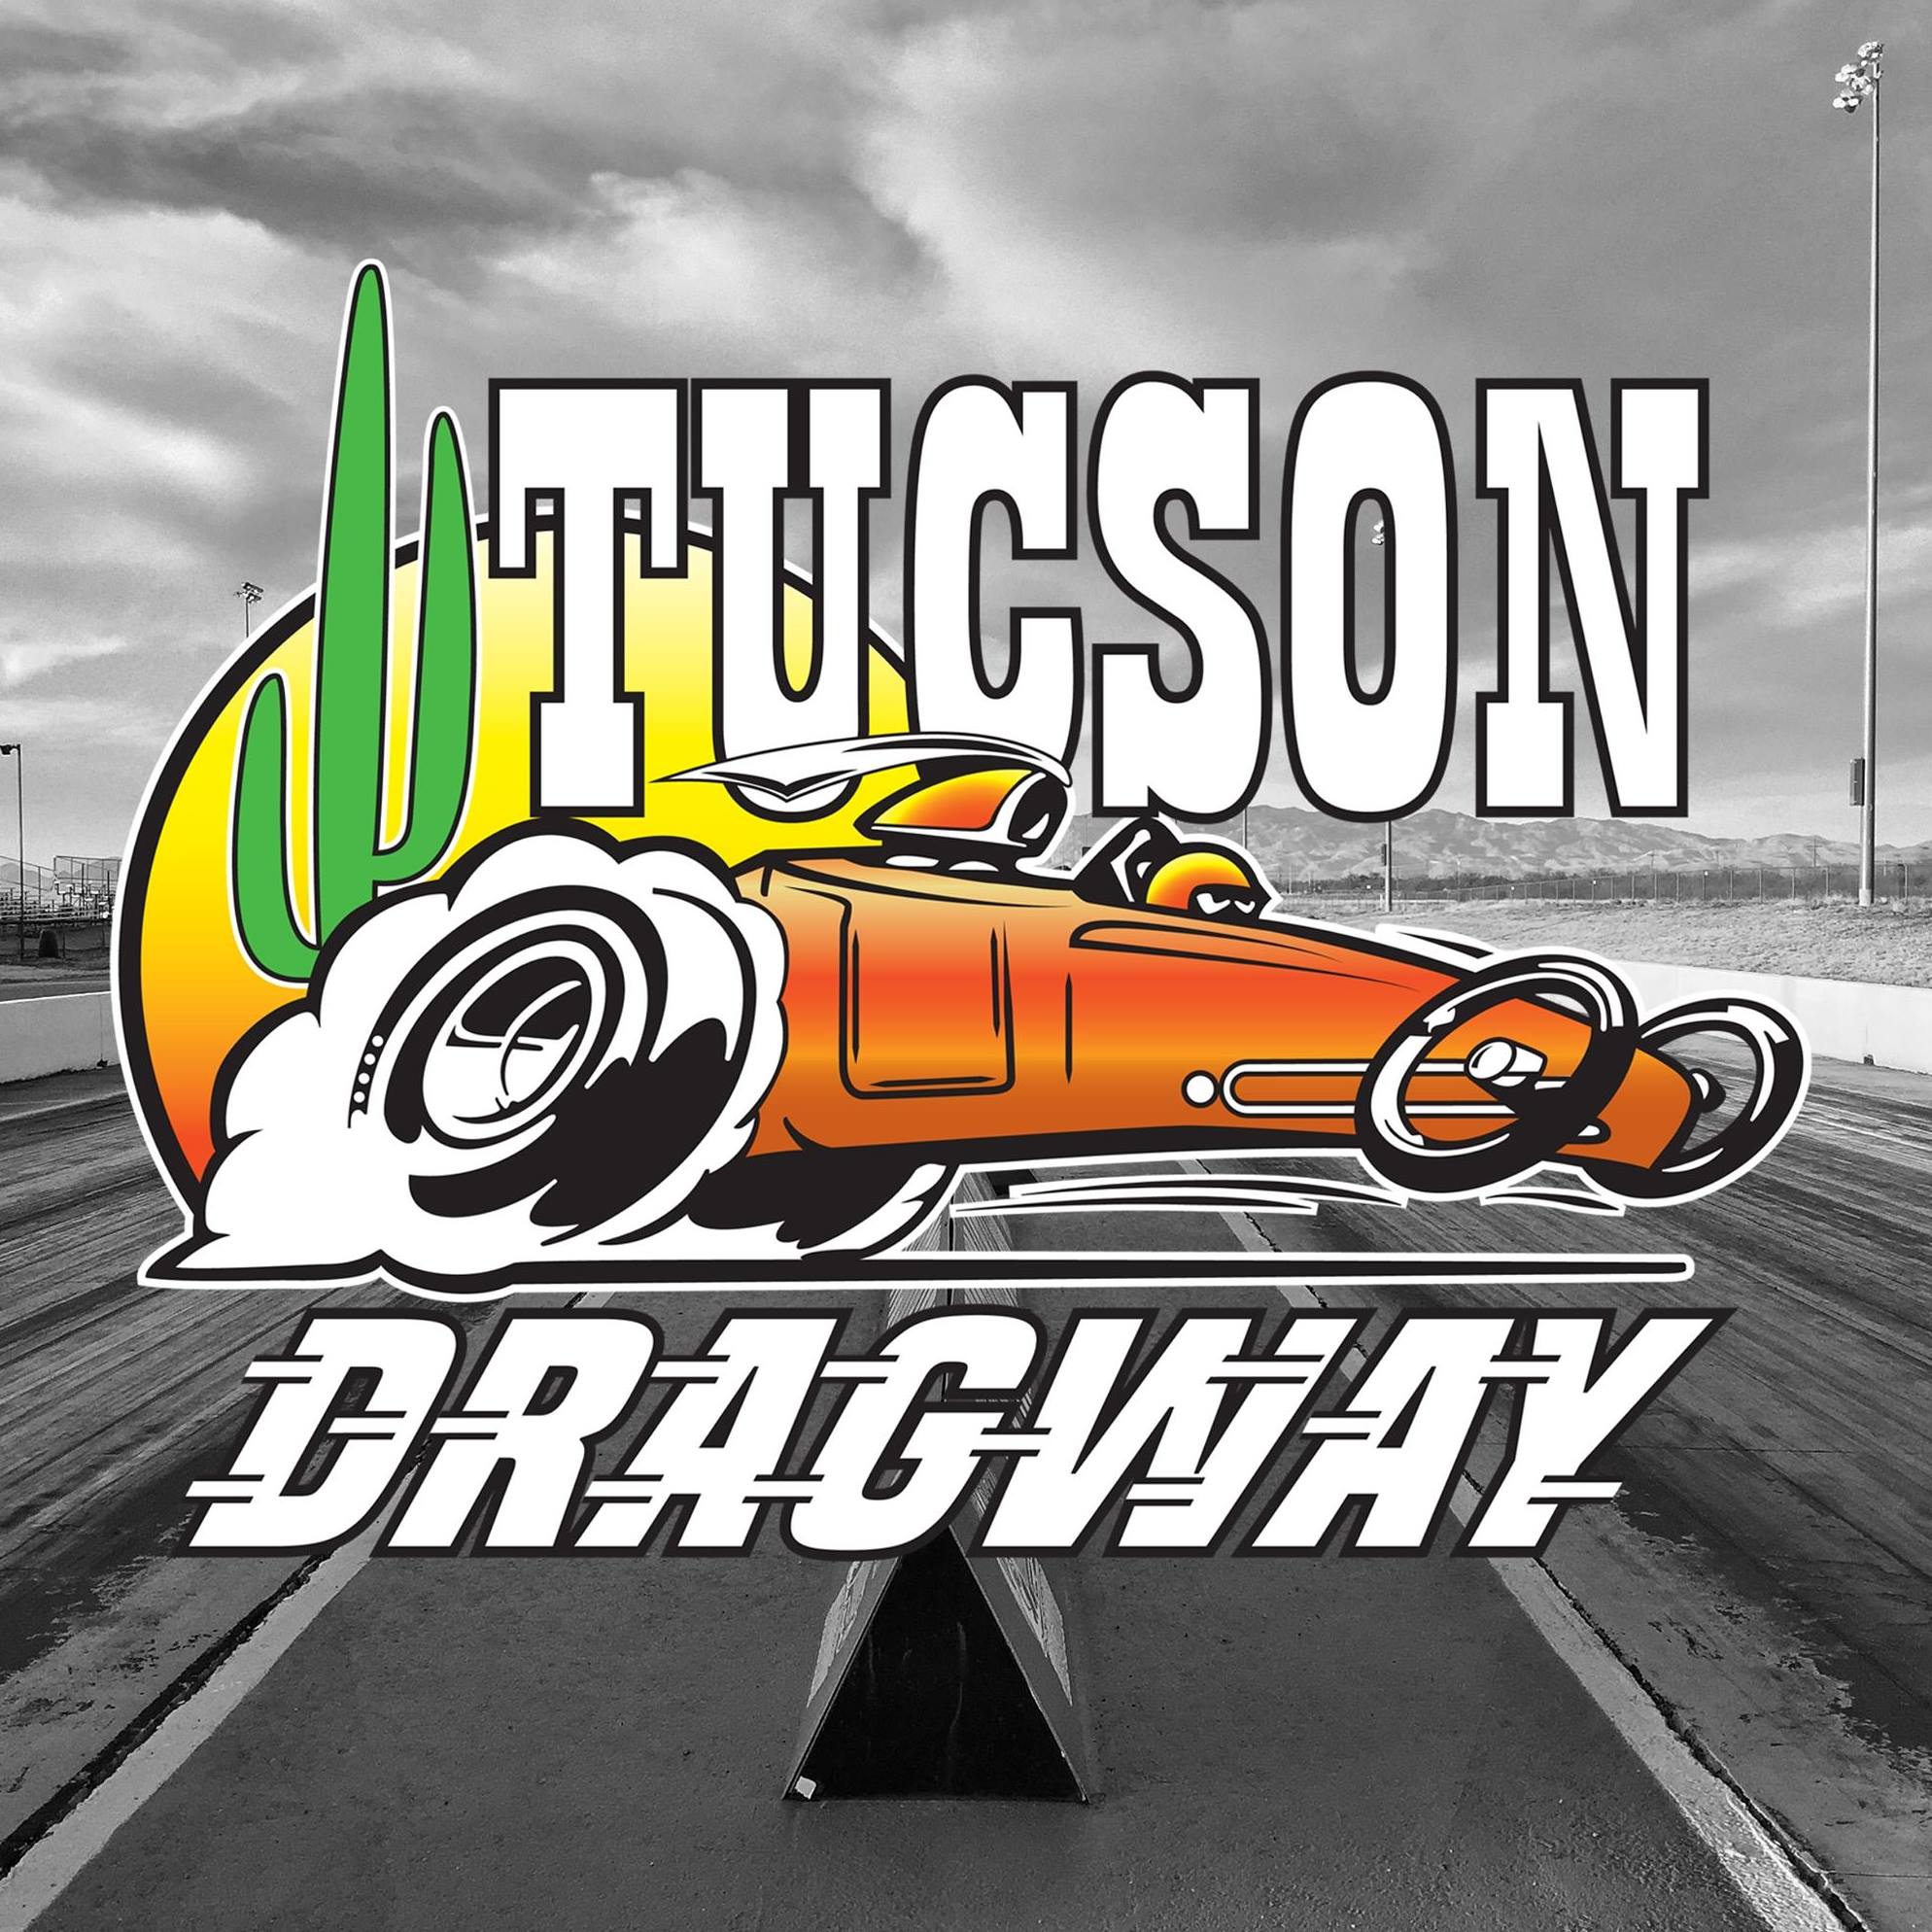 Tucson Dragway